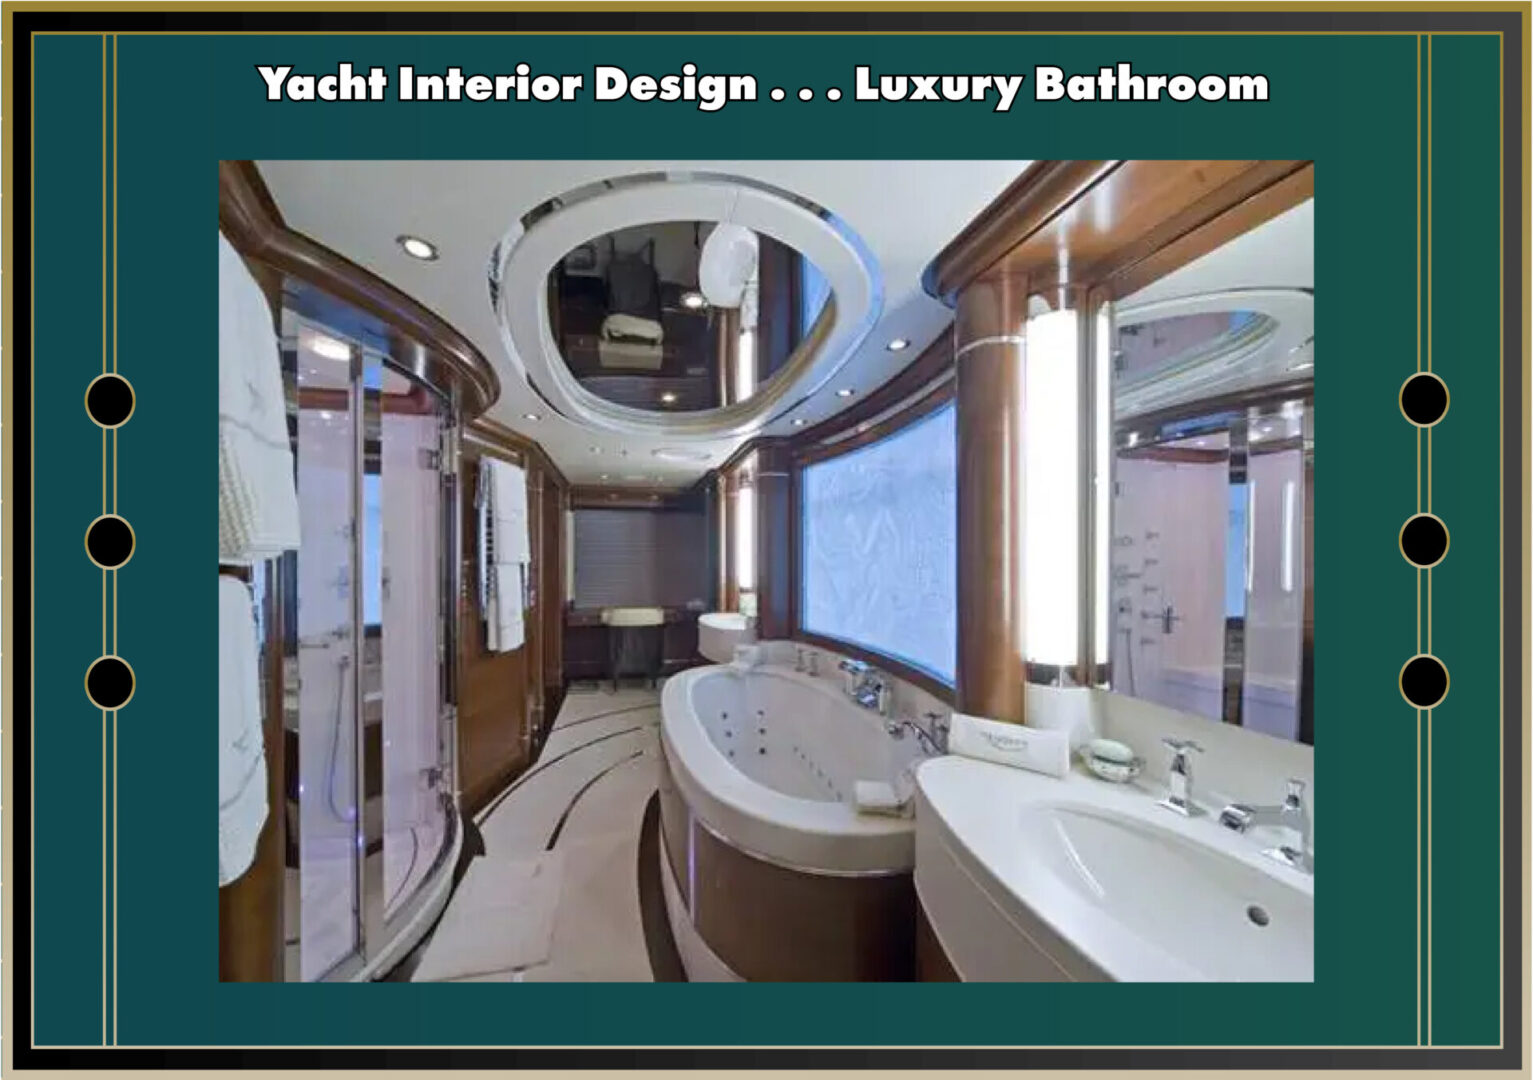 Yacht Interior Design for Luxury Bathroom